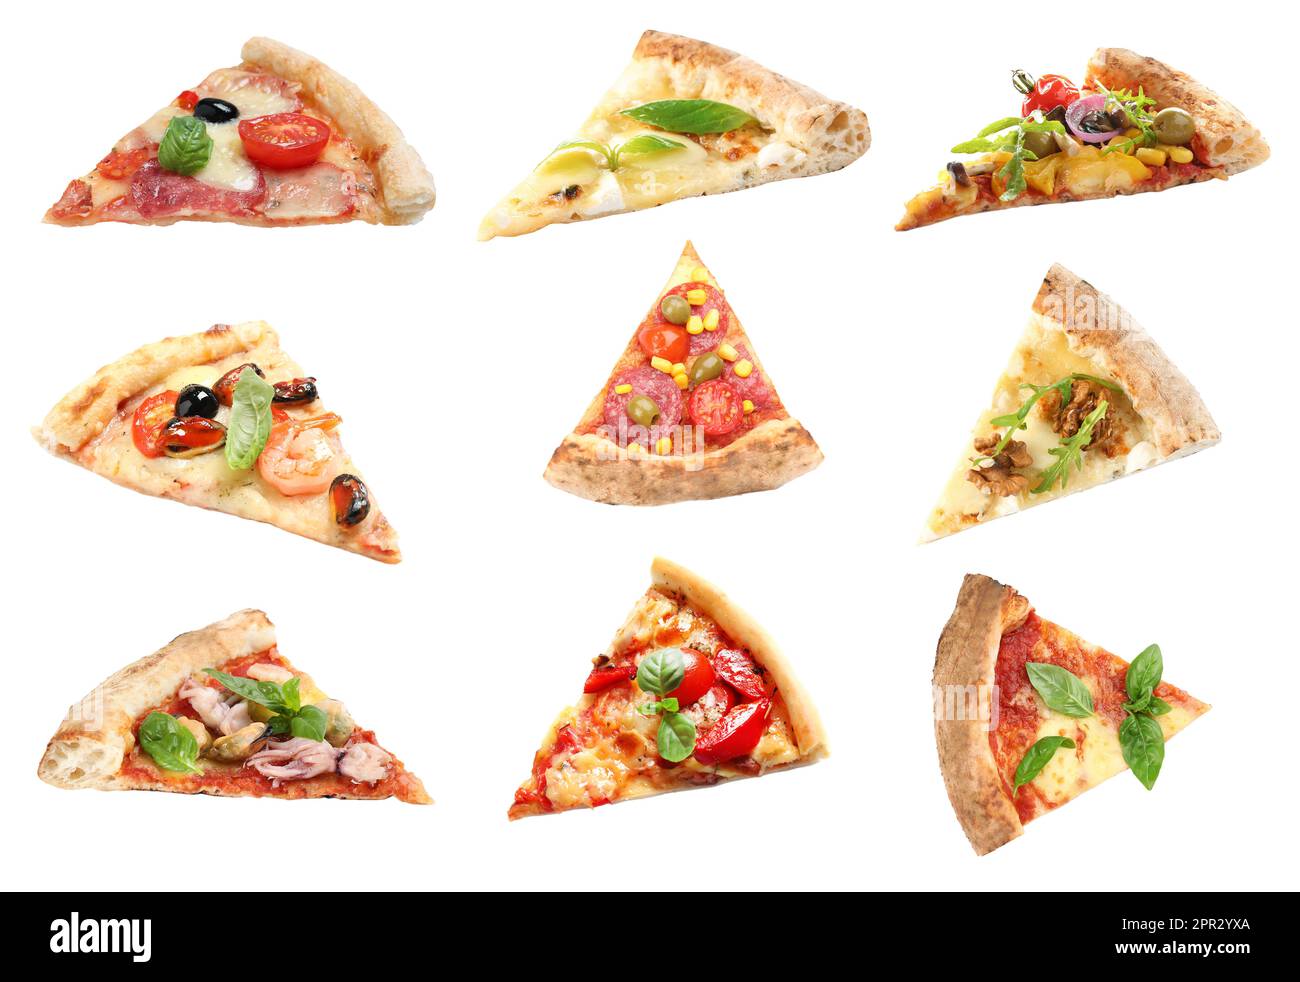 google doodles - How do you divide the Muzzarella pizza into 7